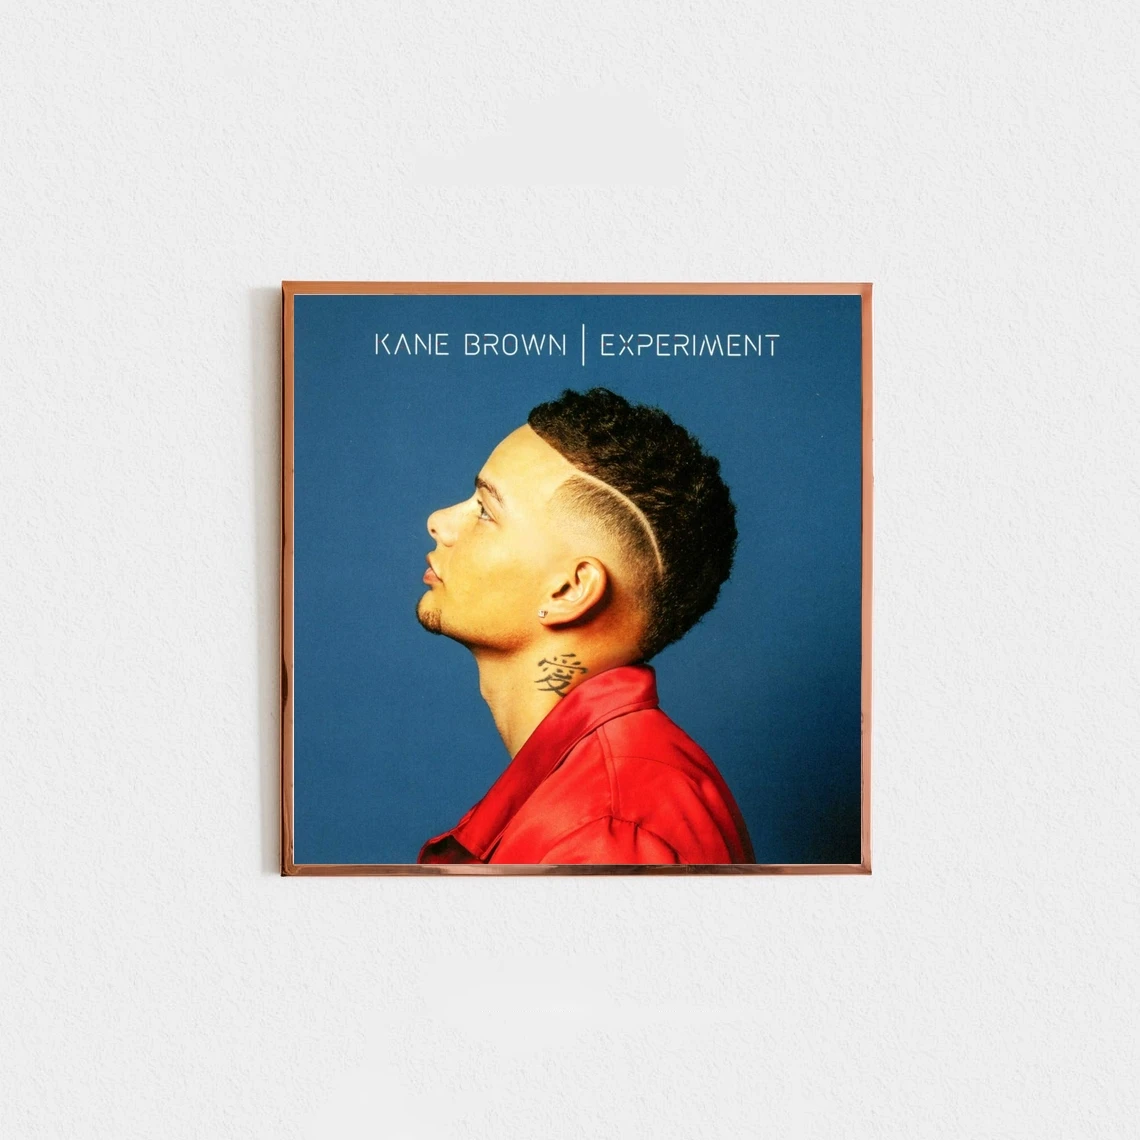 

Kane Brown-Homesick, музыкальный альбом, холст, постер, искусство, хип-хоп, рэпер, поп-музыка, звезда, дом, искусство